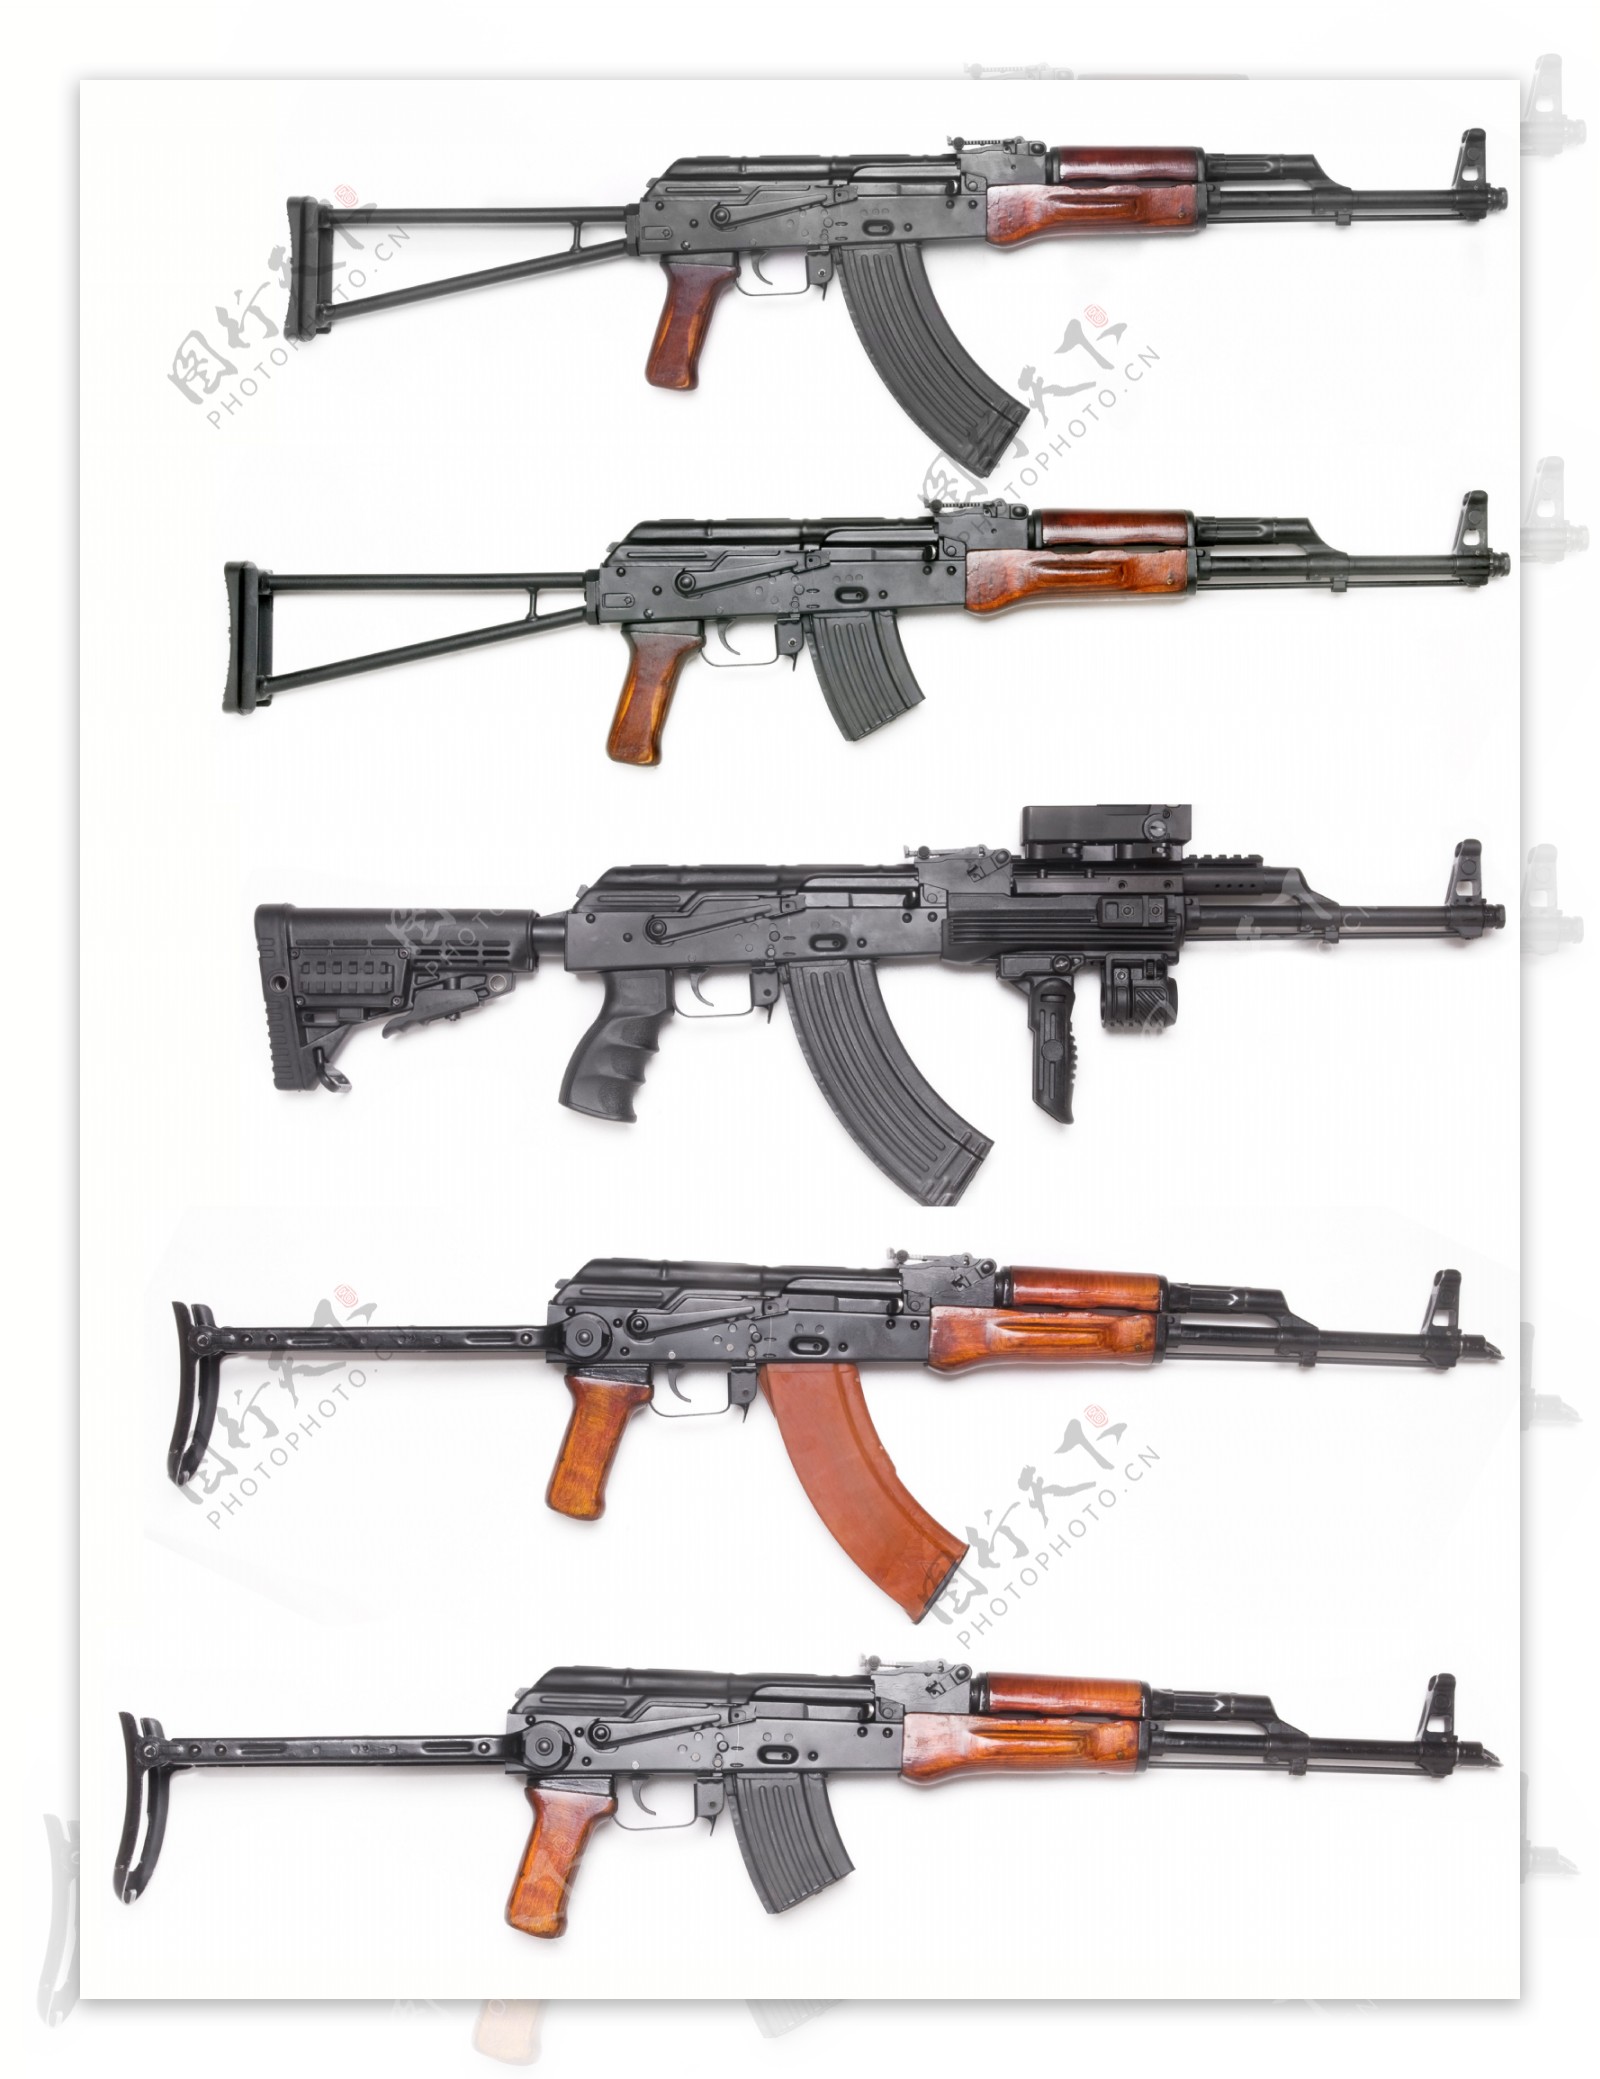 AK47冲锋枪图片